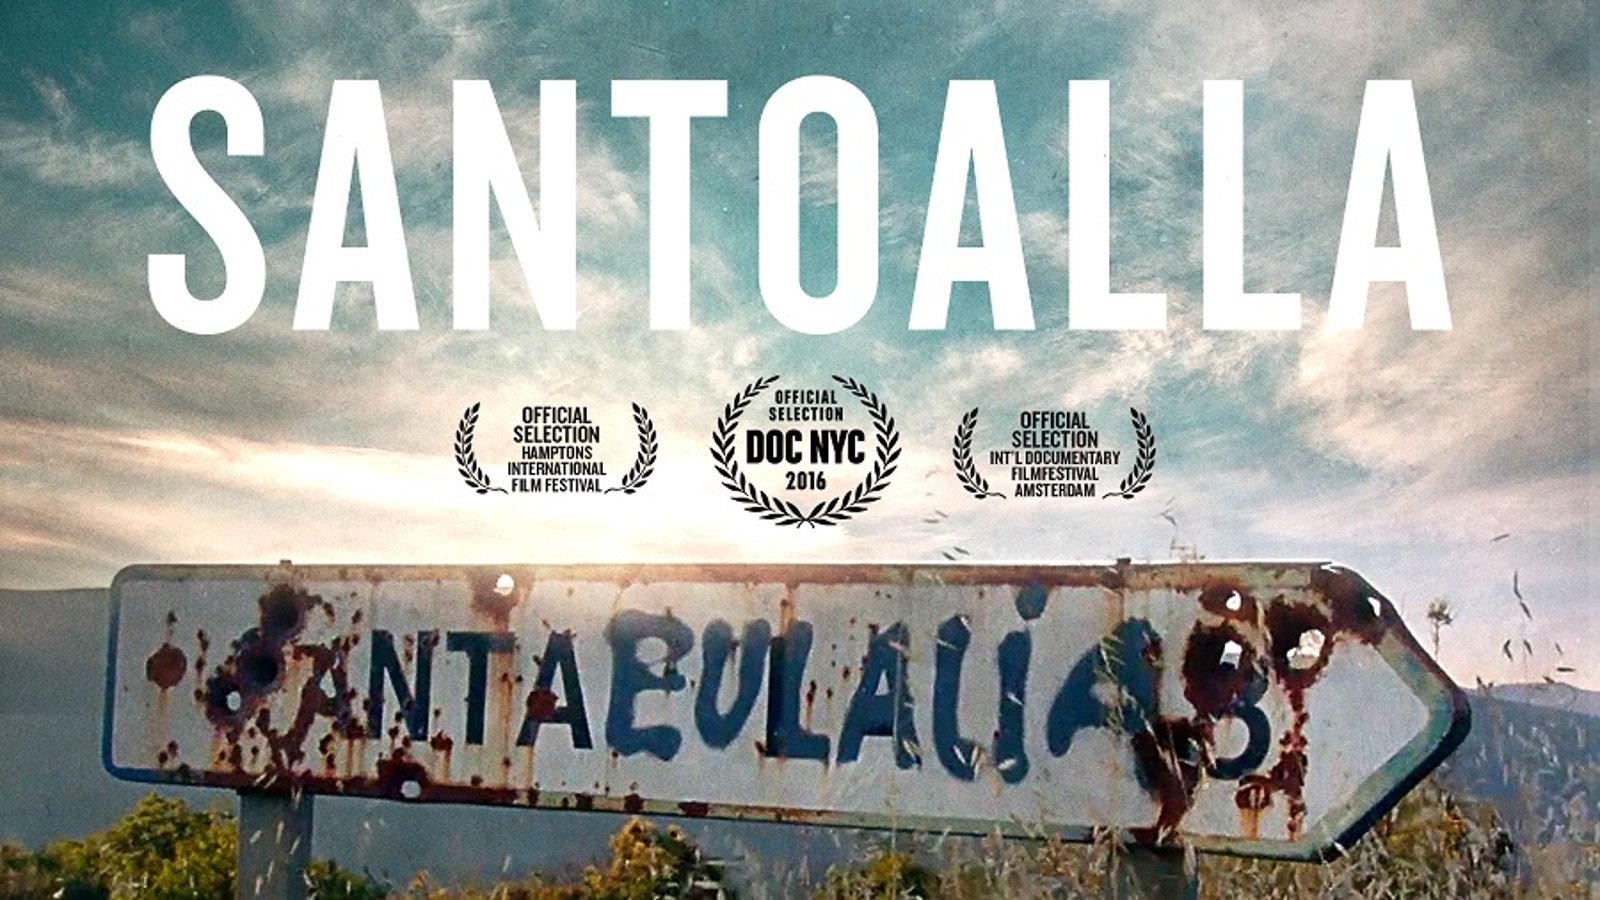 Santoalla - A Missing Expatriate in a Small Spanish Village